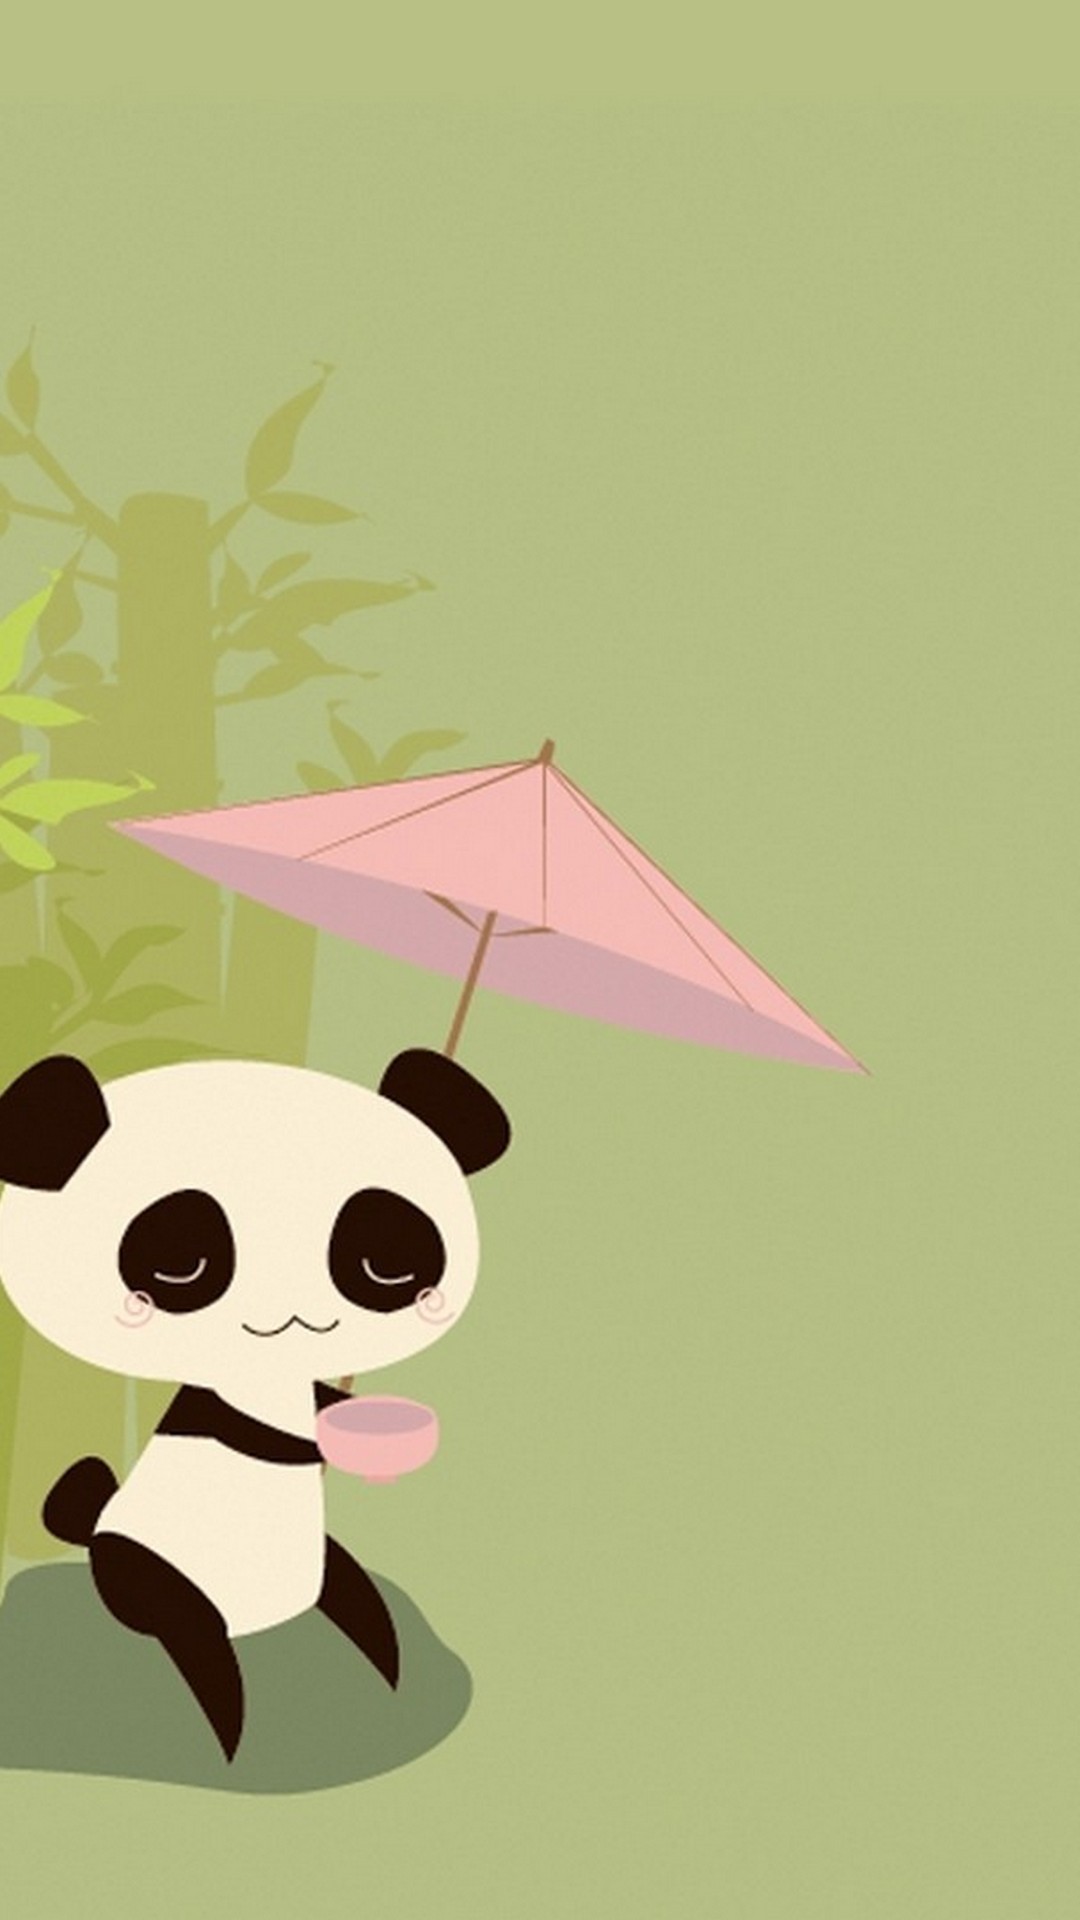 panda wallpaper,karikatur,illustration,regenschirm,kunst,drachen